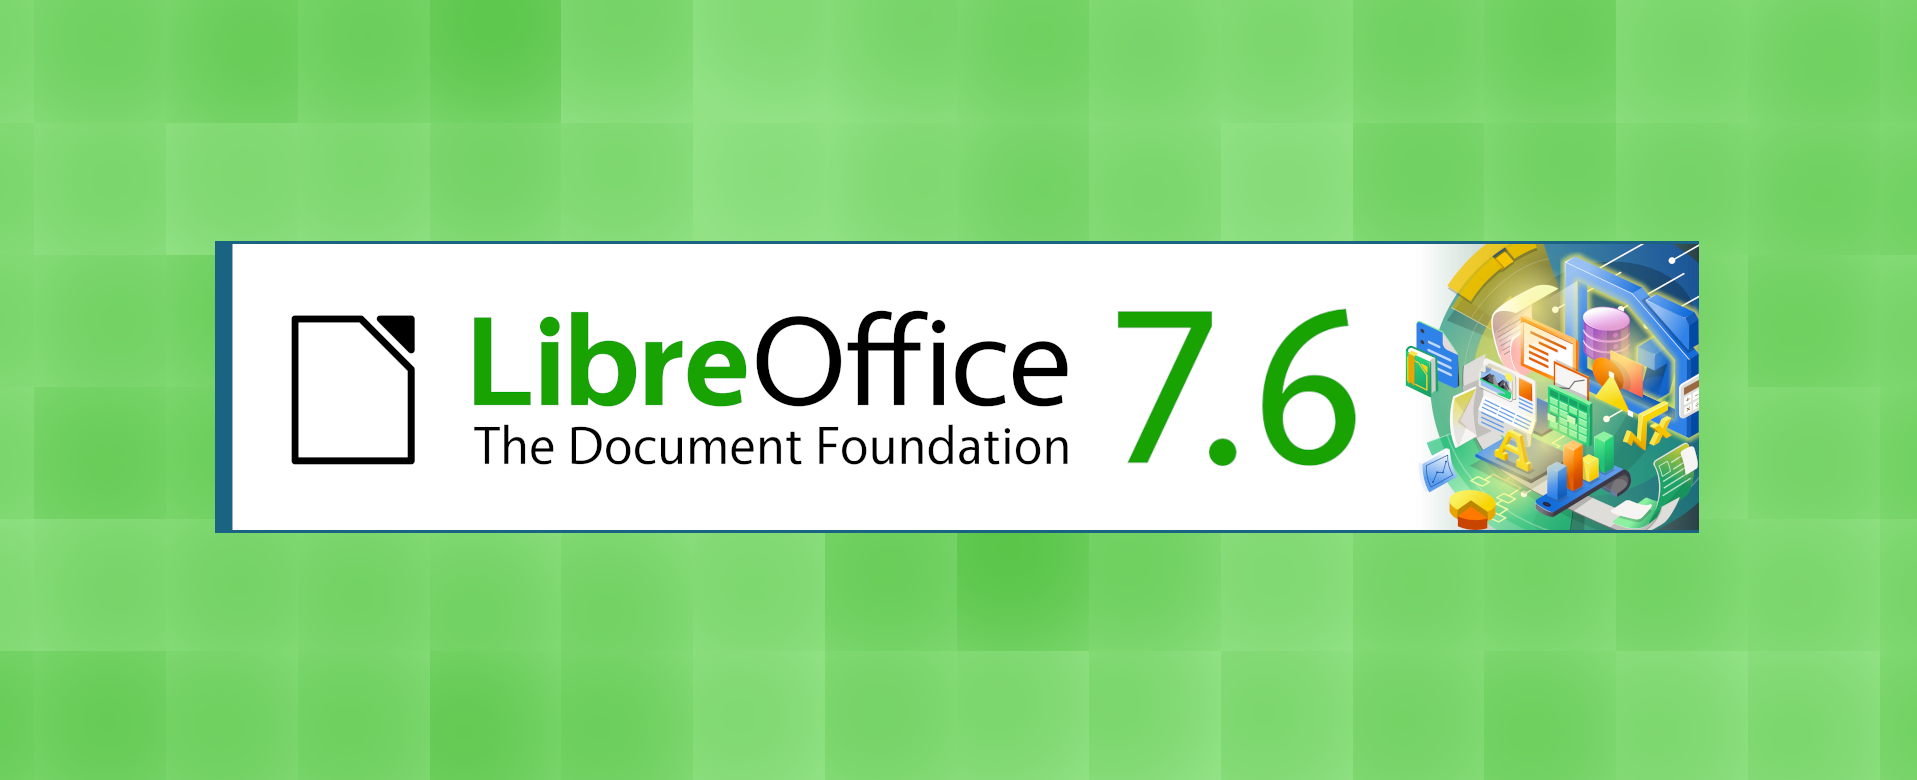 LibreOffice 7.6 banner